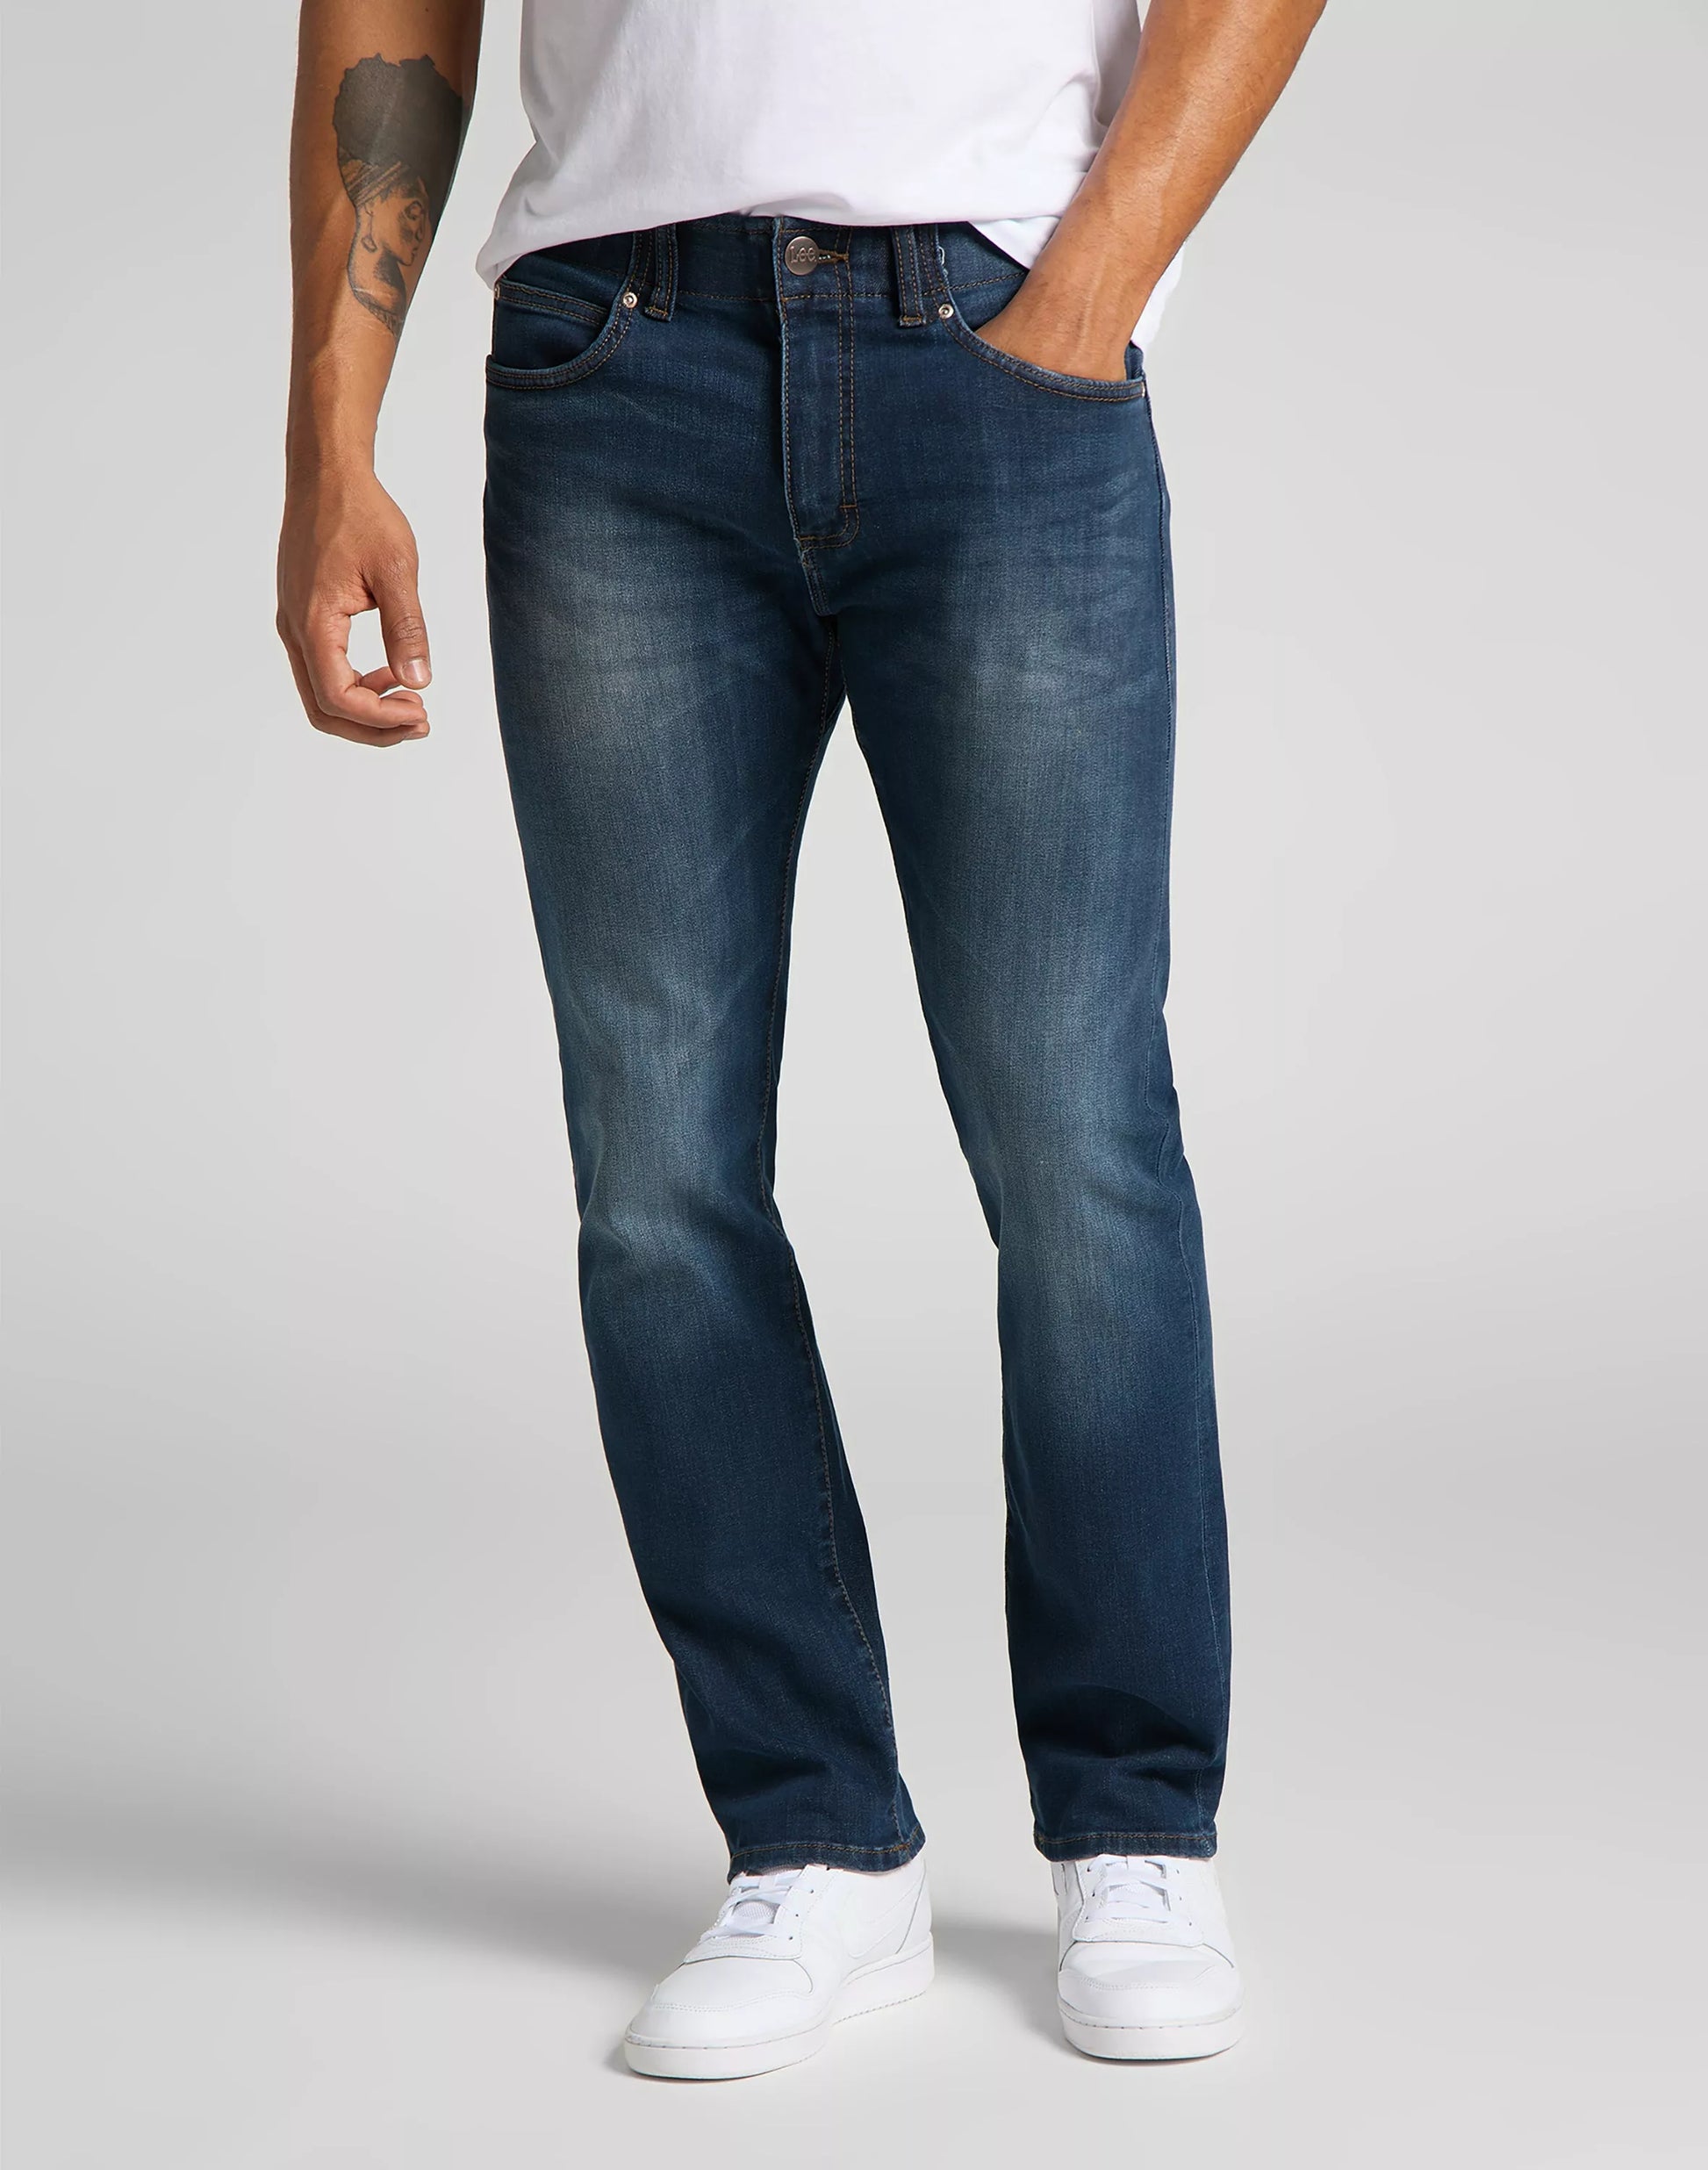 Lee Jeans Slim Fit – RD1 Clothing